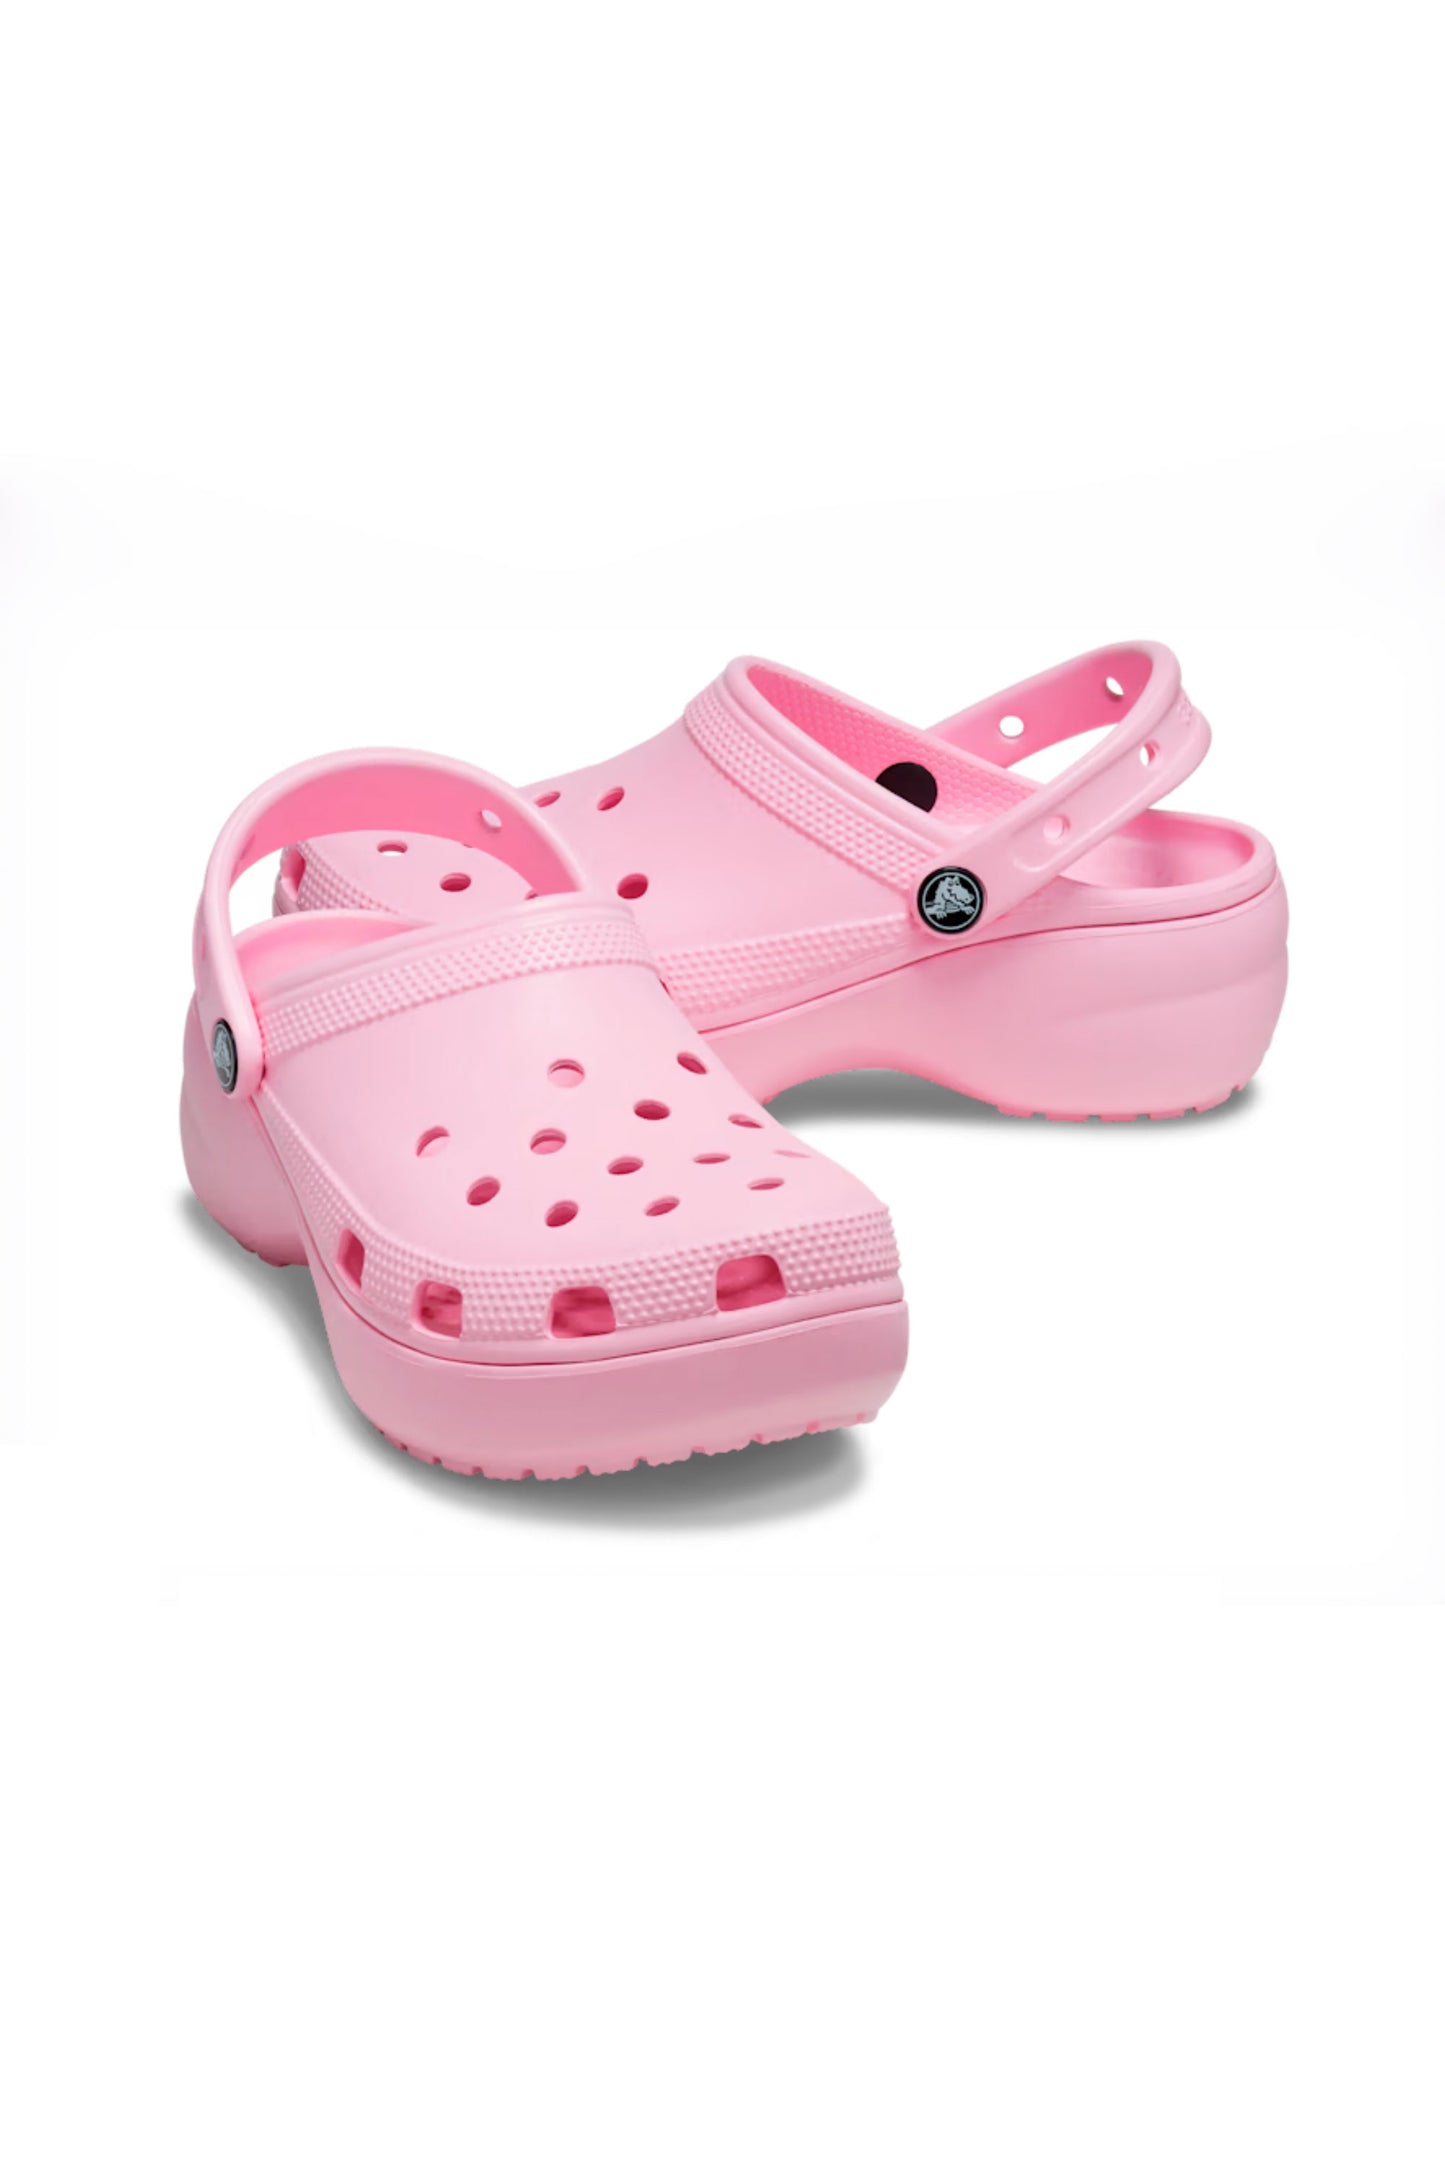     Pukas-Surf-Shop-crocs-footwear-classic-platform-flamingo